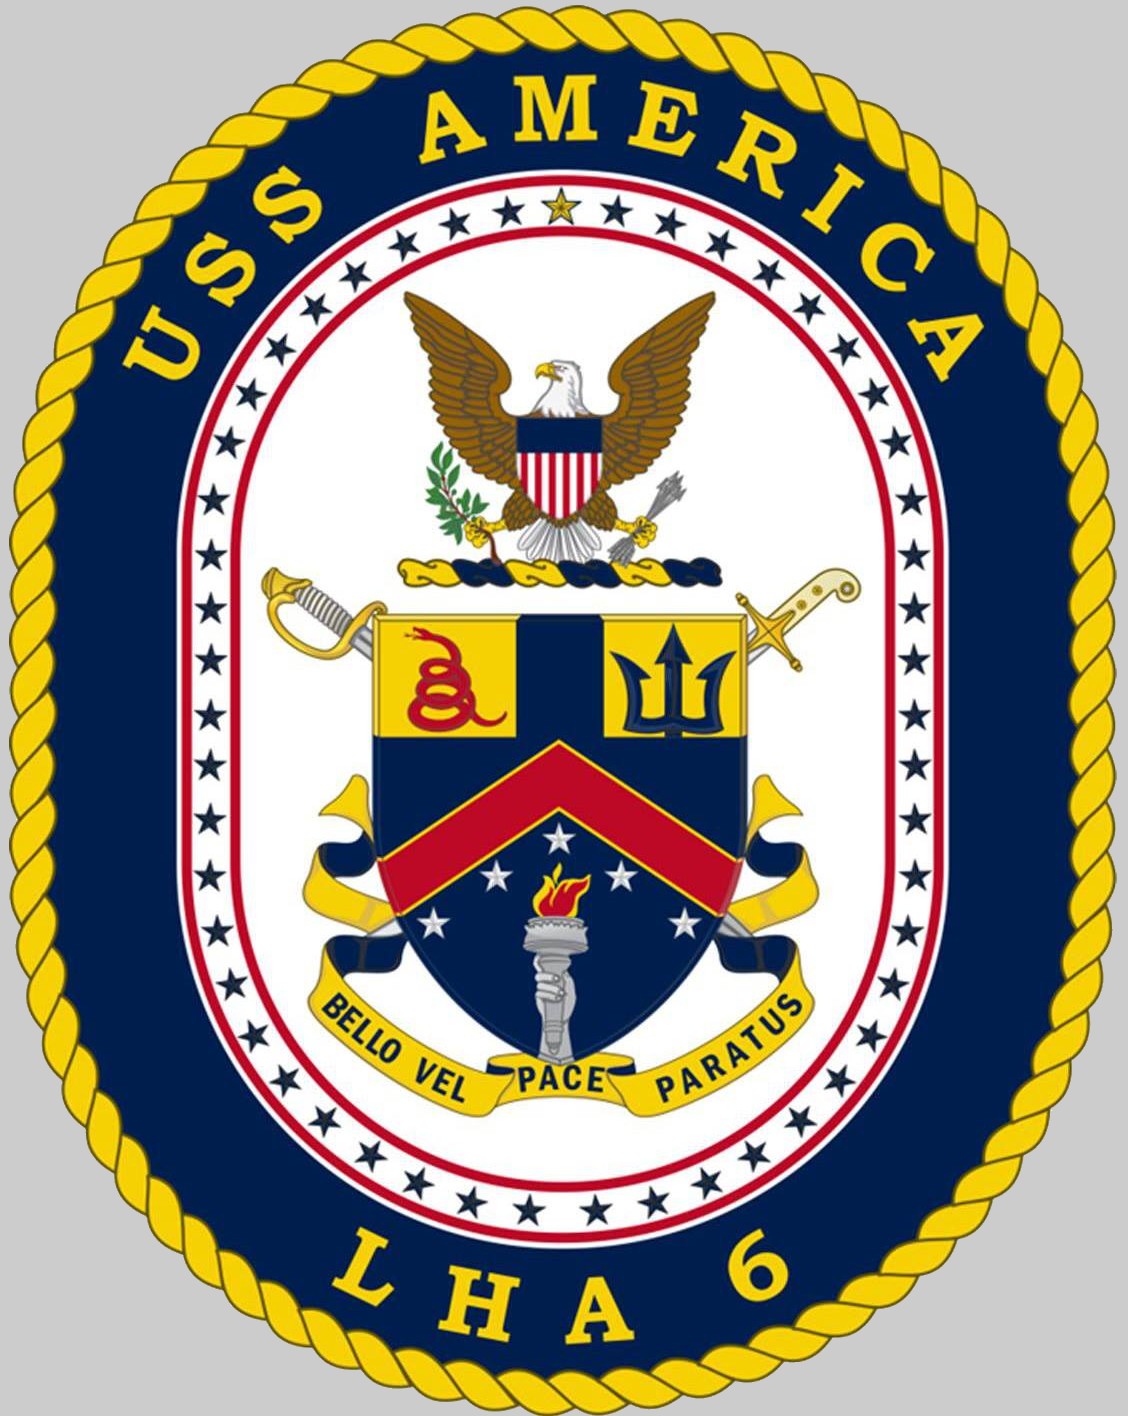 lha-6 uss america crest insignia patch badge amphibious assault ship landing us navy 02x